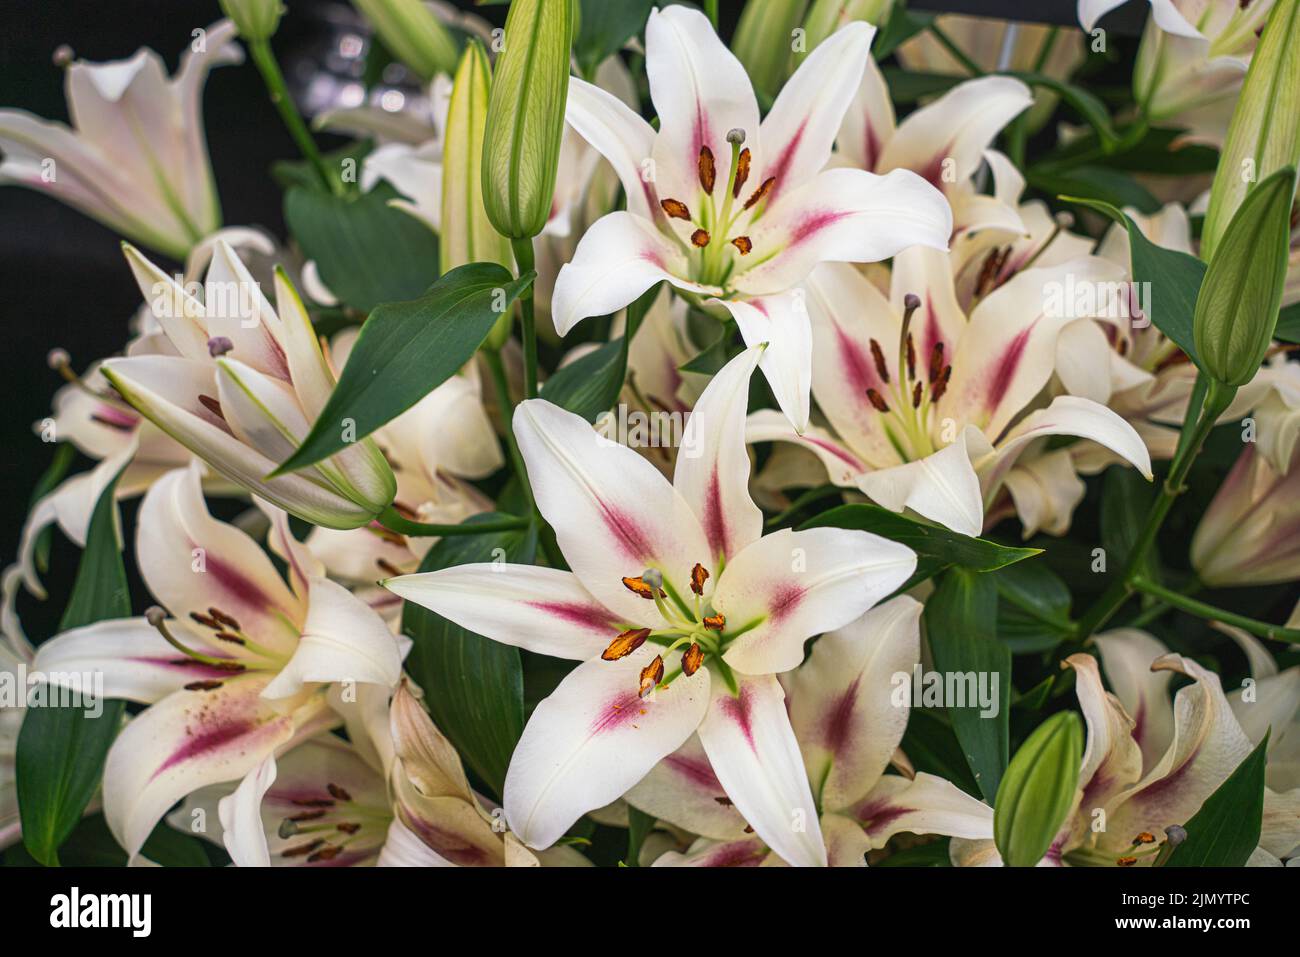 Lilium, Nymph, Oriental lily, Liliaceae, Bulb, flamboyant, fragrant blooms, lilies, six white petals, orange stamens, green foliage, stamen stains. Stock Photo